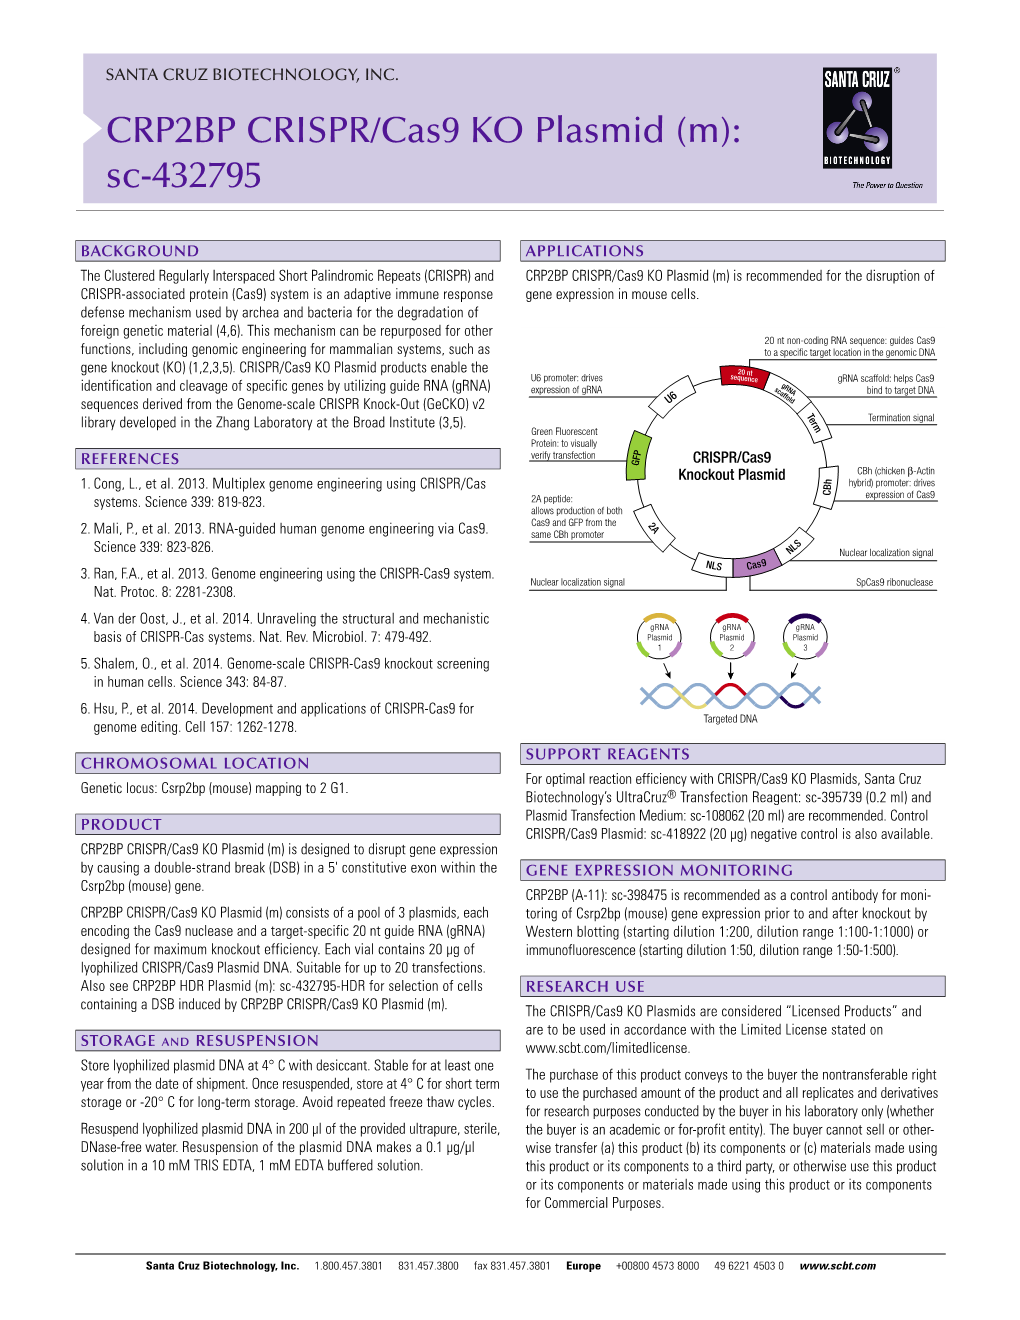 CRP2BP CRISPR/Cas9 KO Plasmid (M): Sc-432795